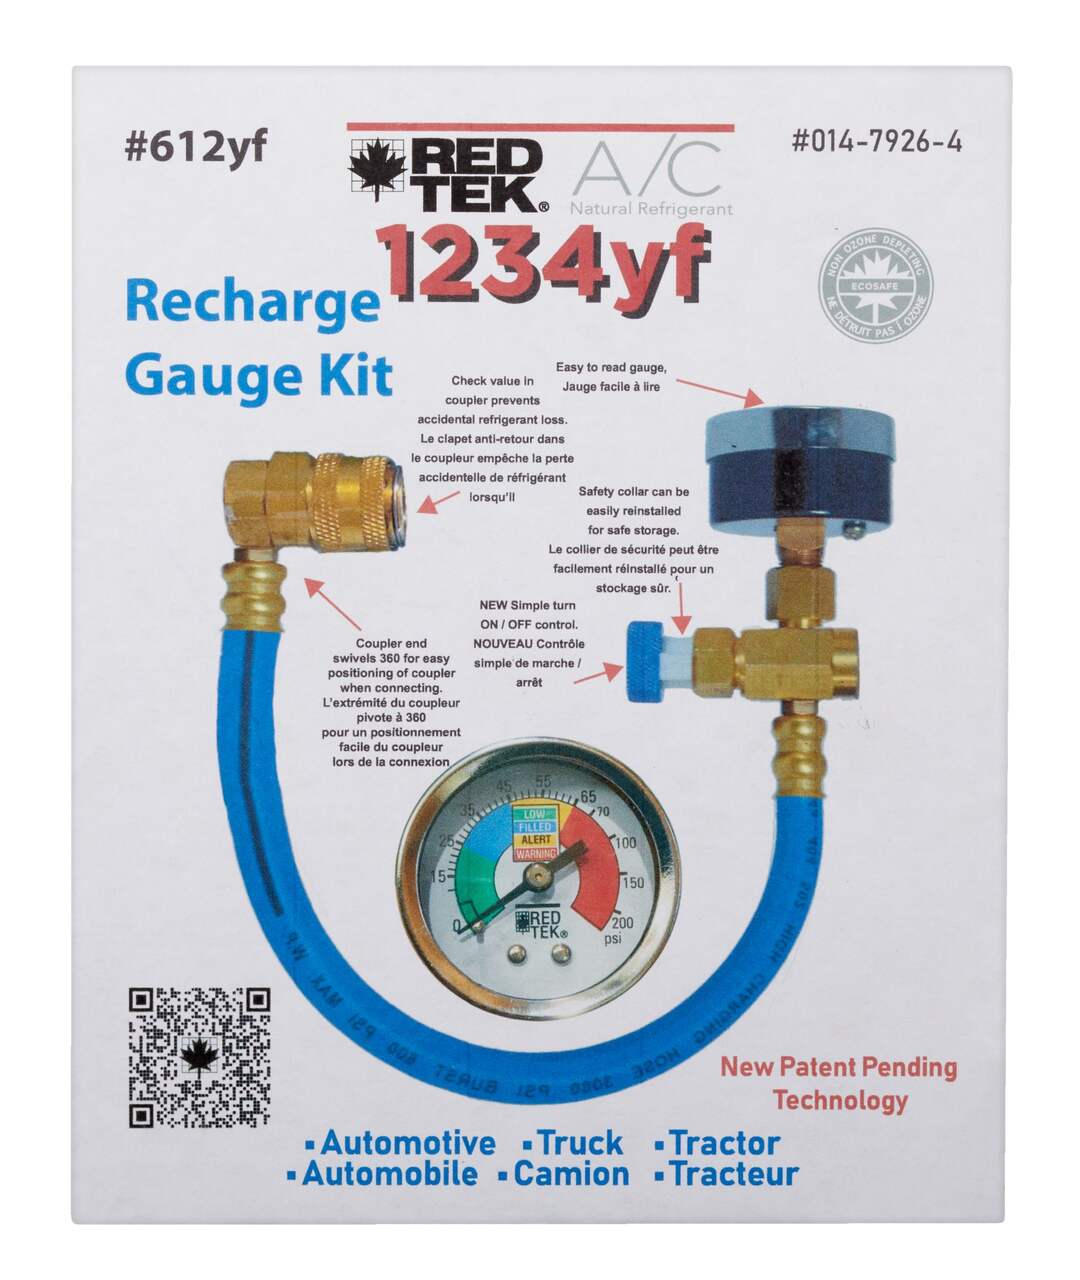 R1234yf Refrigerant Recharge Kit, 1234yf Refrigerant Kit, r1234yf